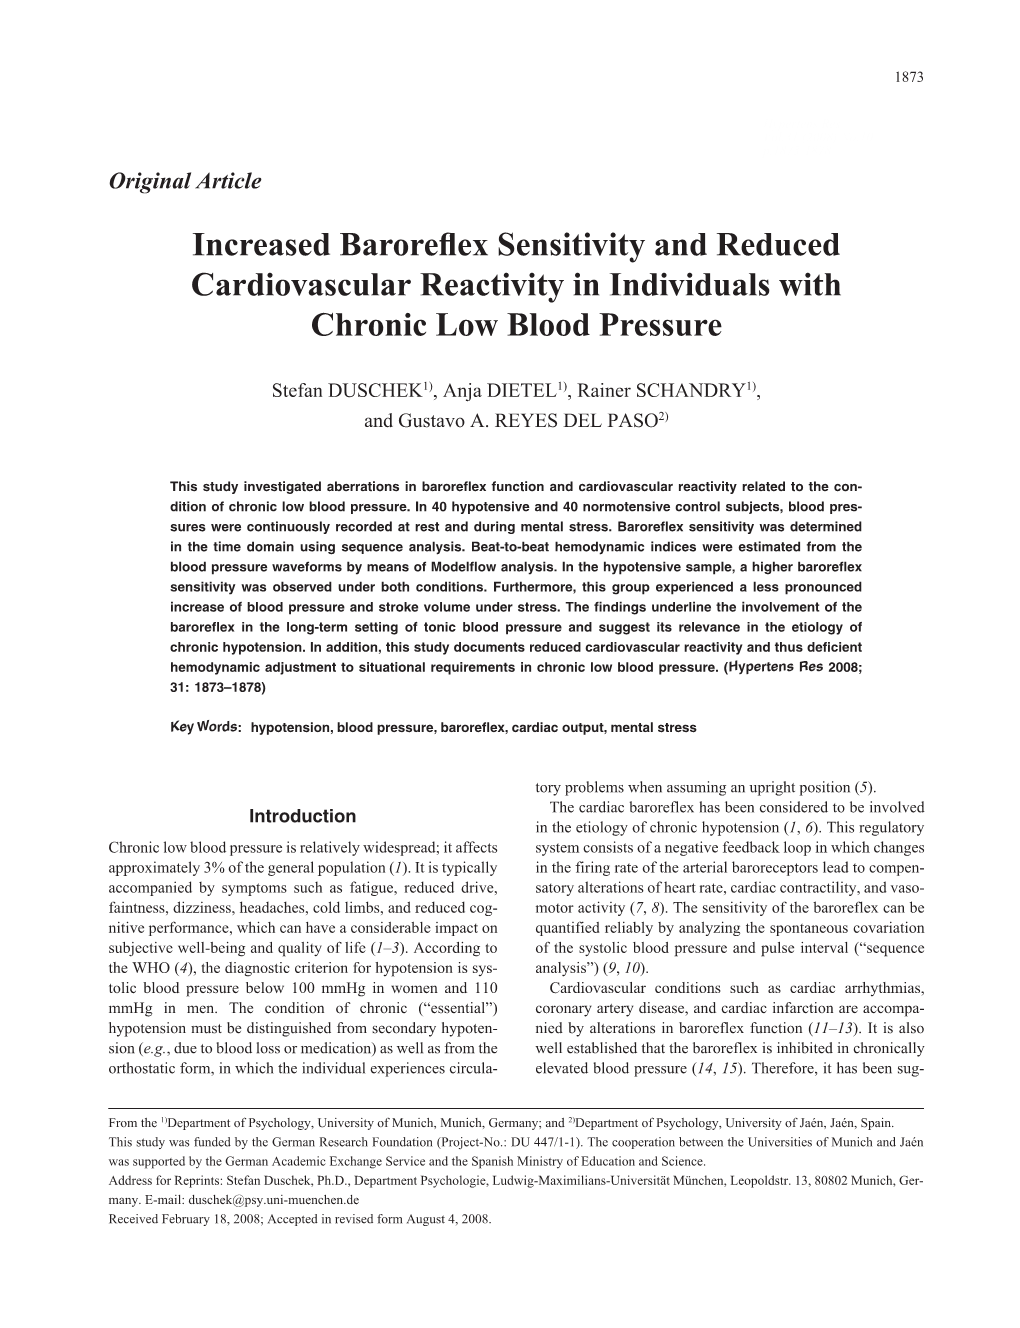 Increased Baroreflex Sensitivity and Reduced Cardiovascular Reactivity